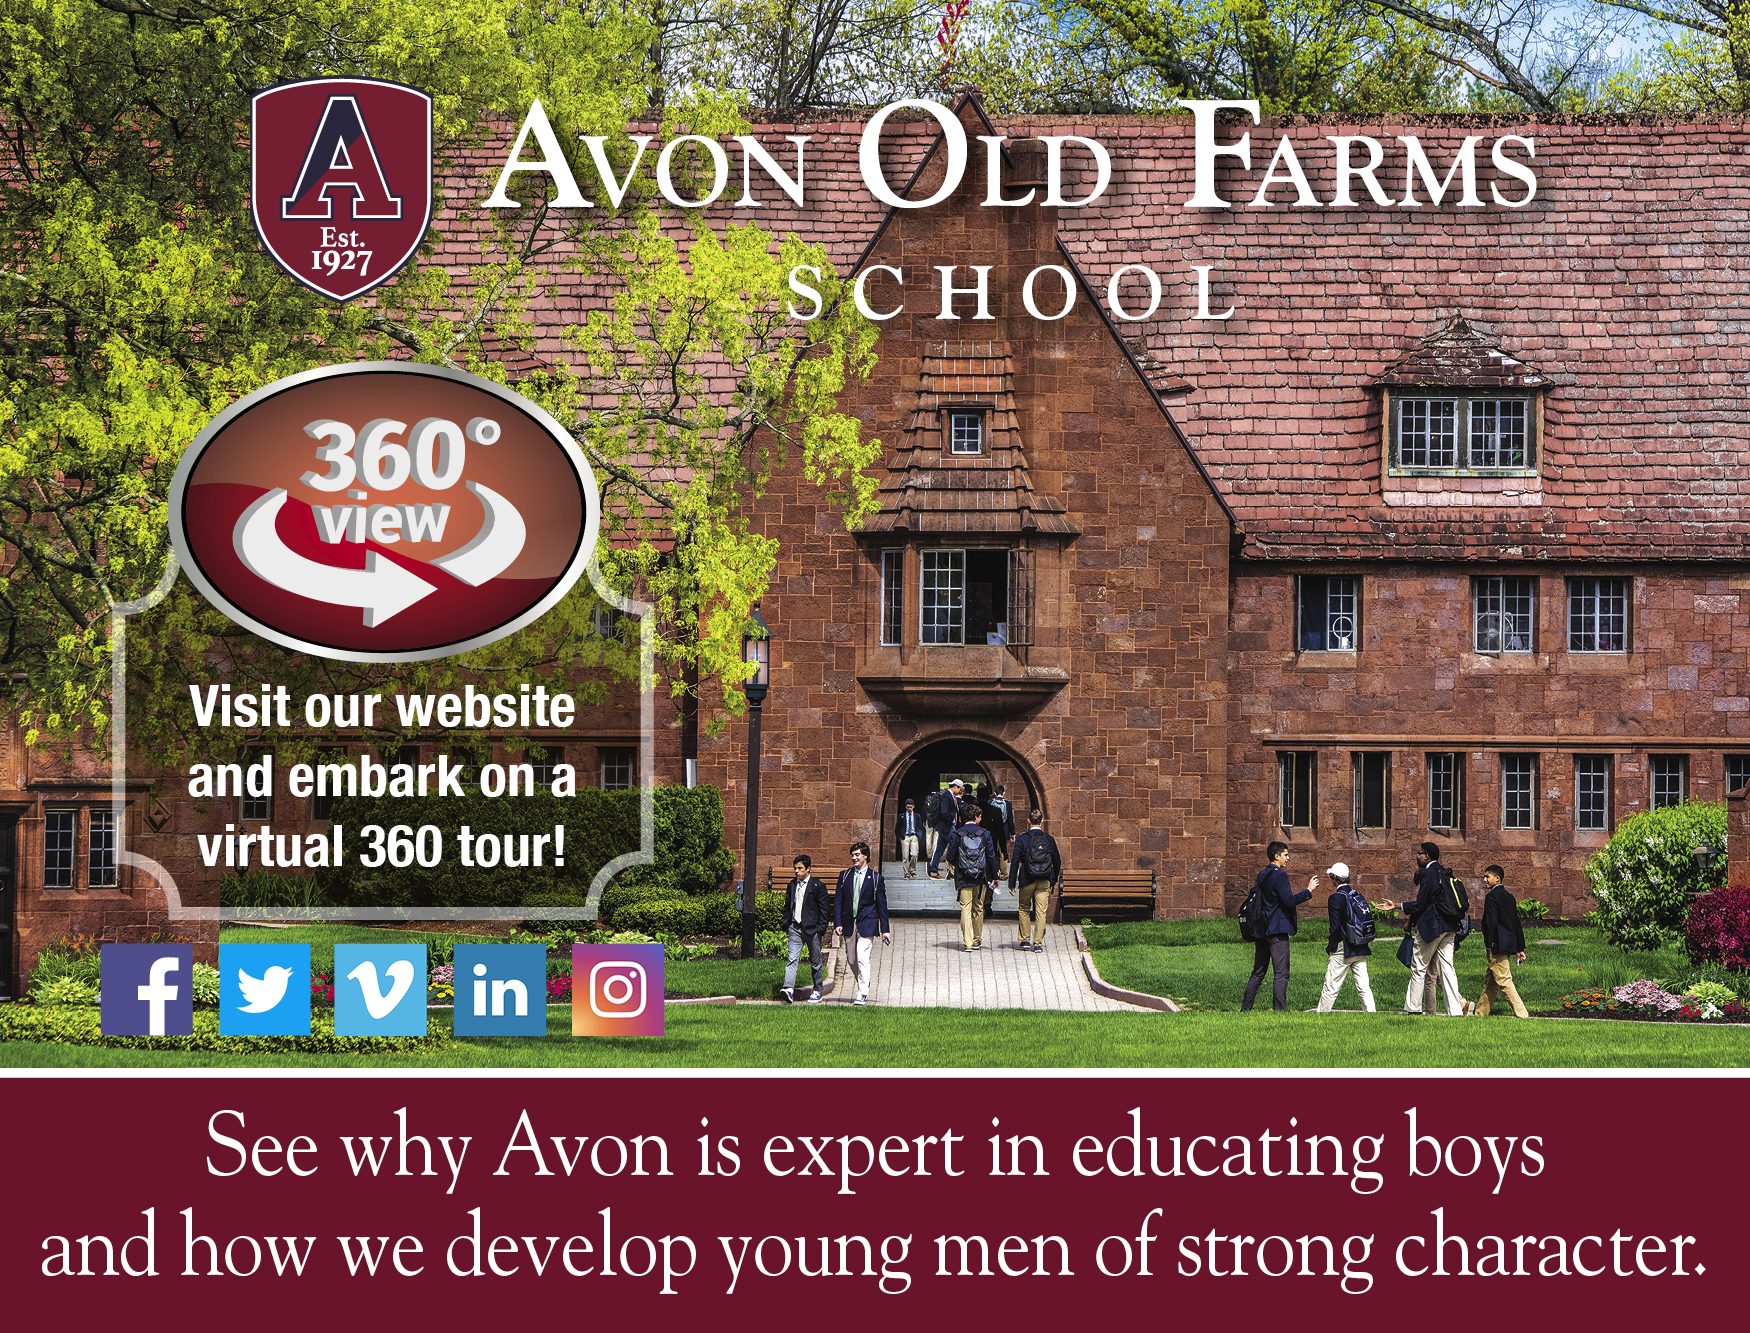 Avon Old Farms School